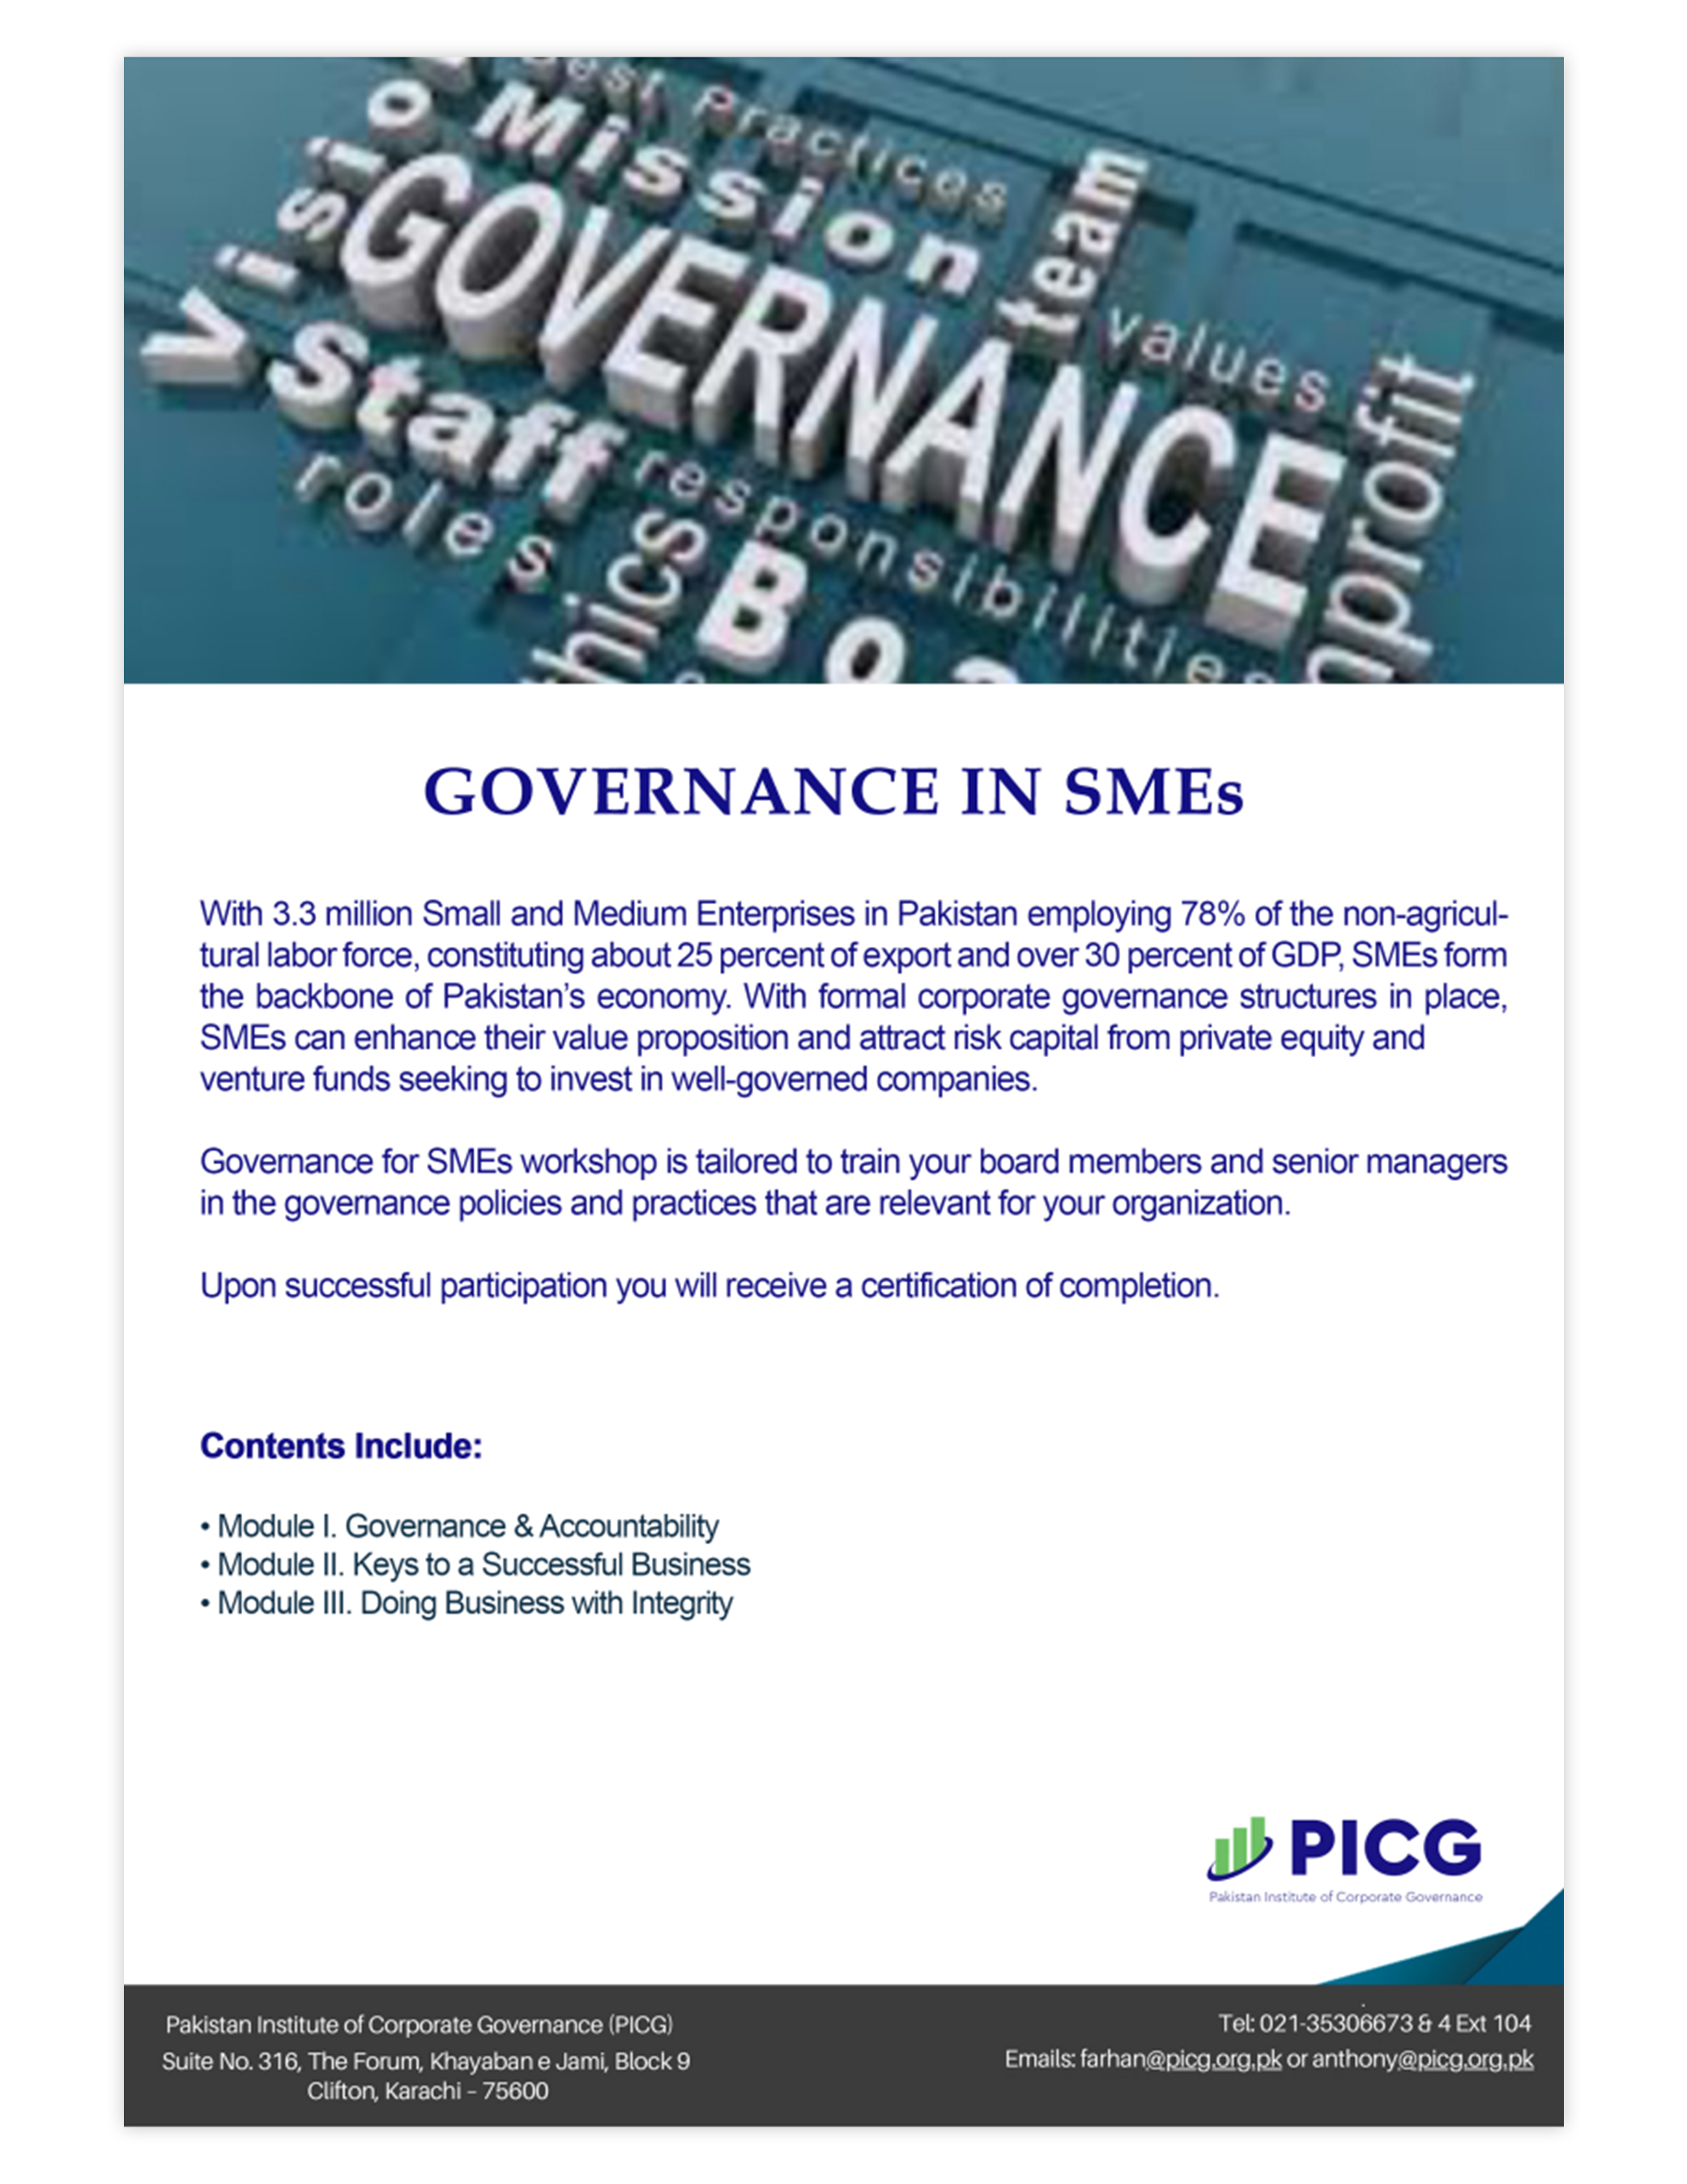 Governance for NPOs